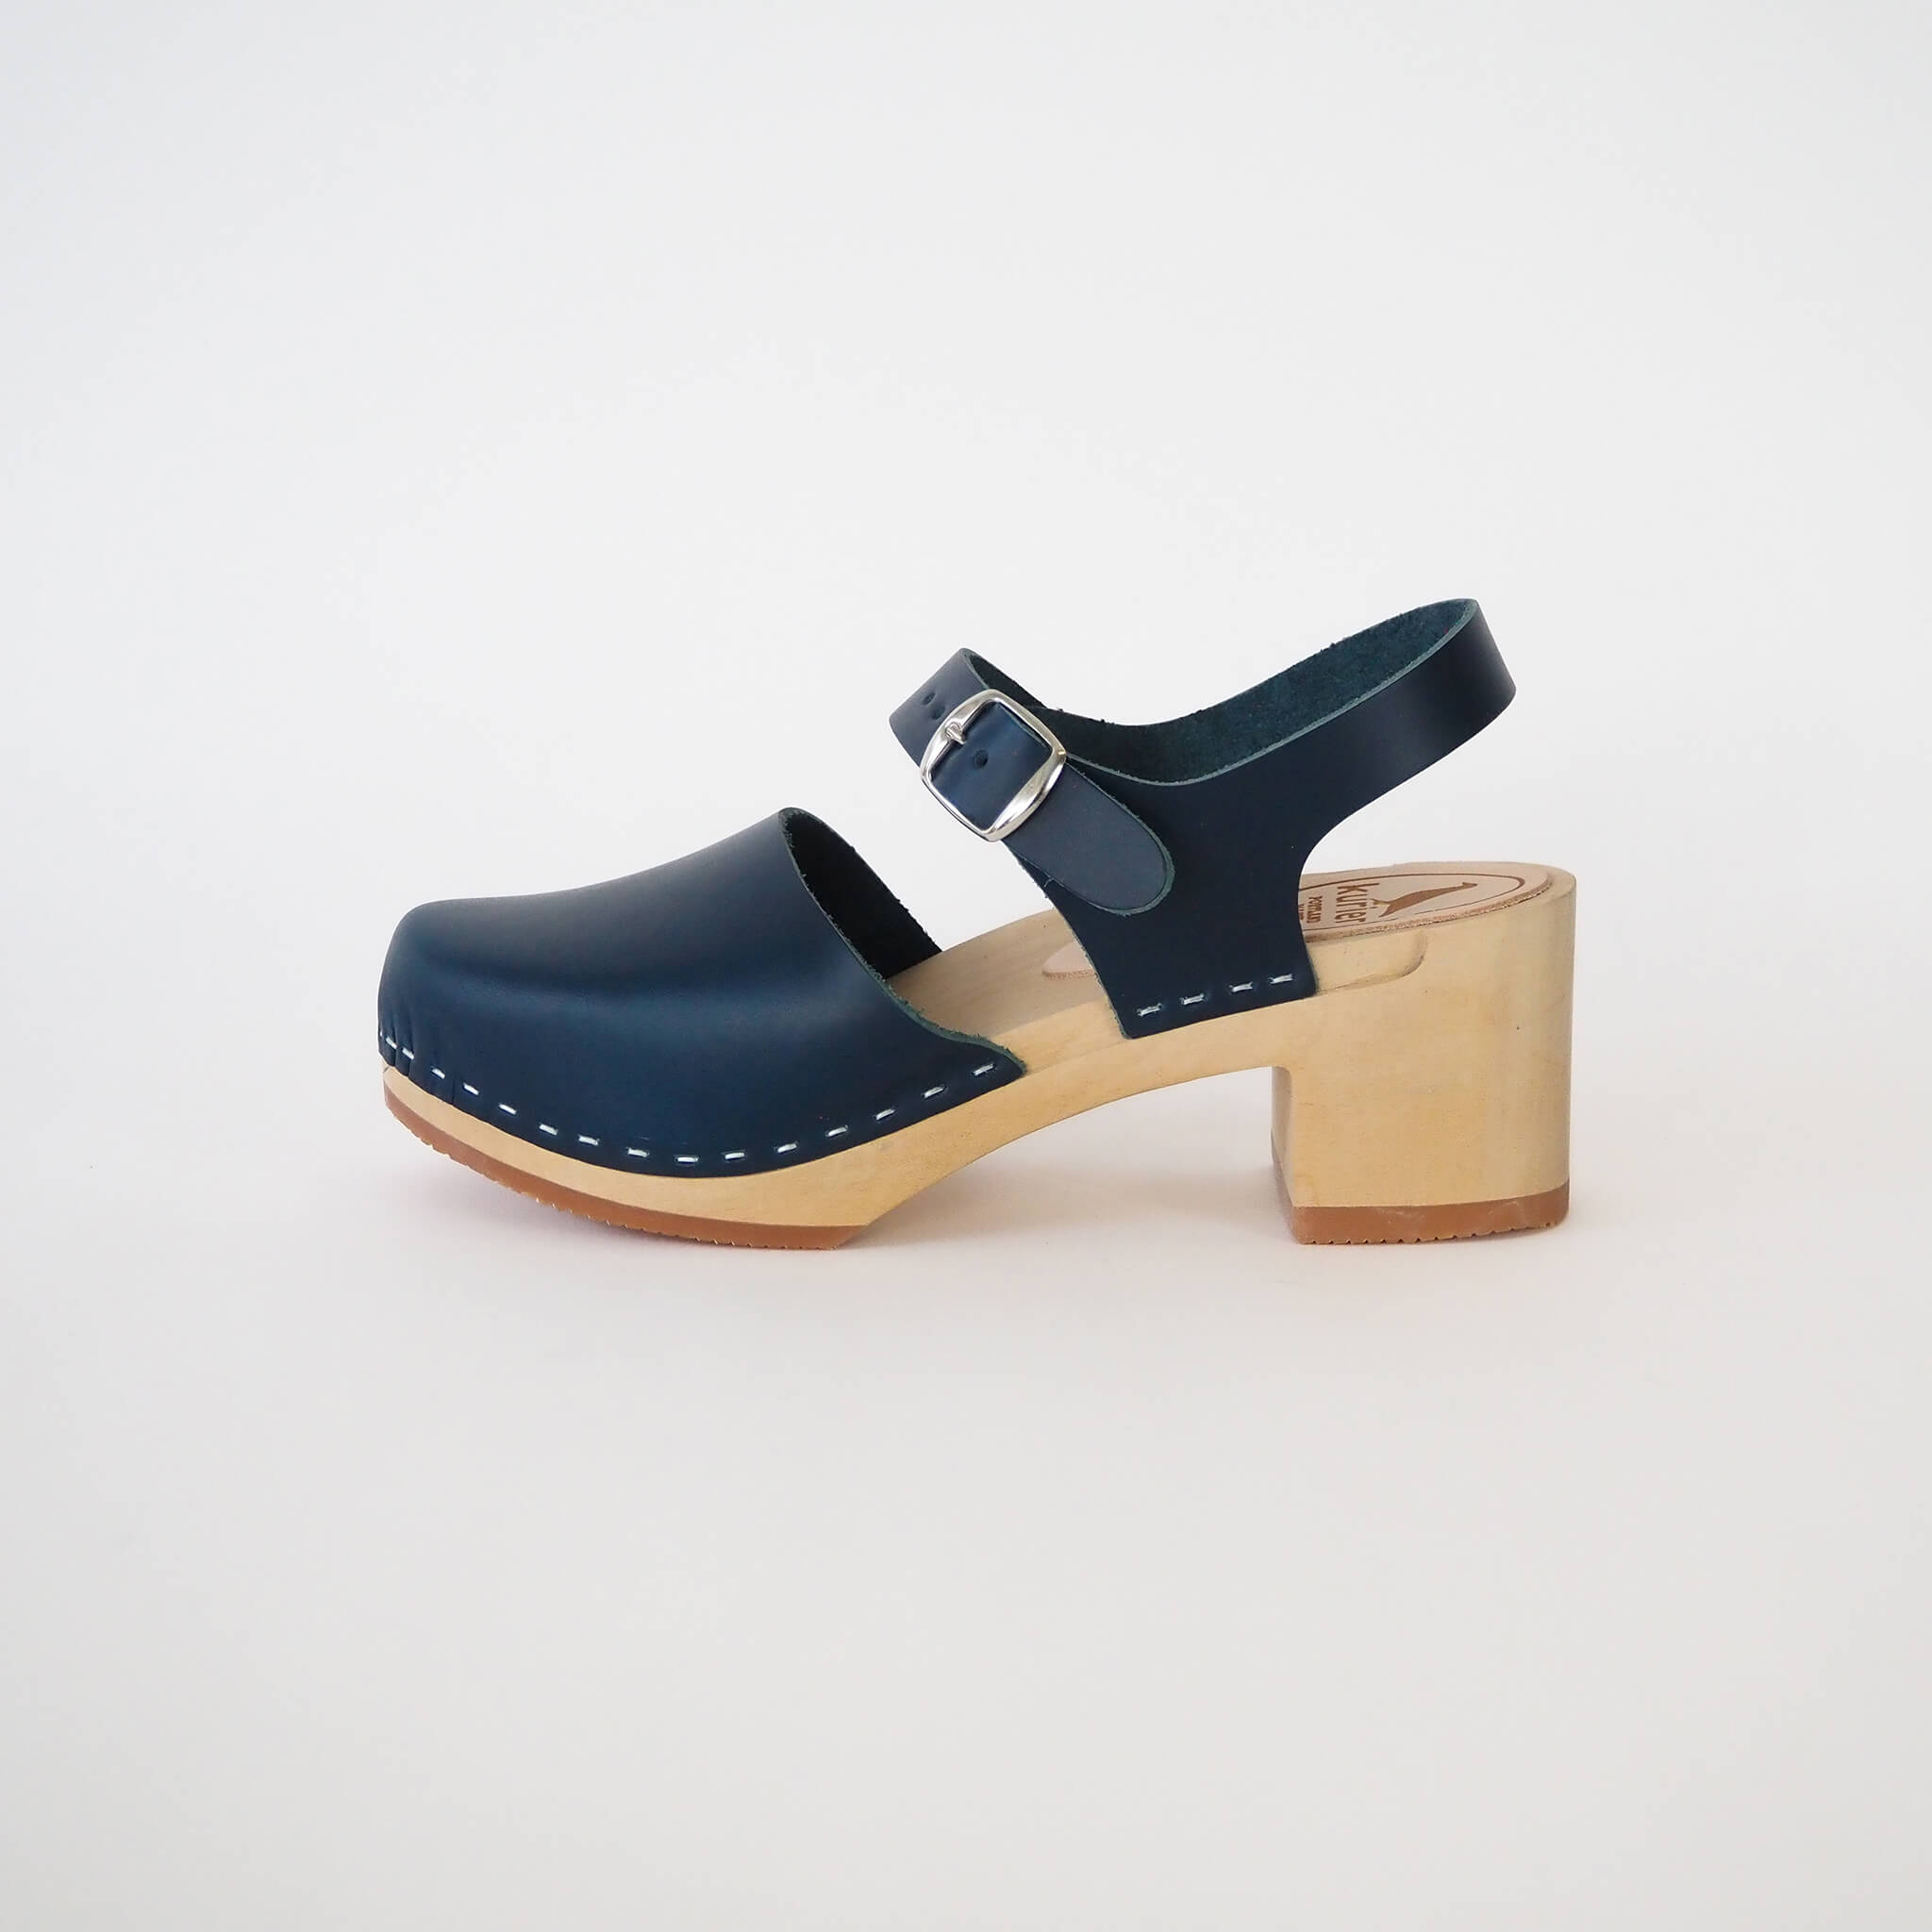 charlie clog high heel closed toe handmade leather/wood - denim side view